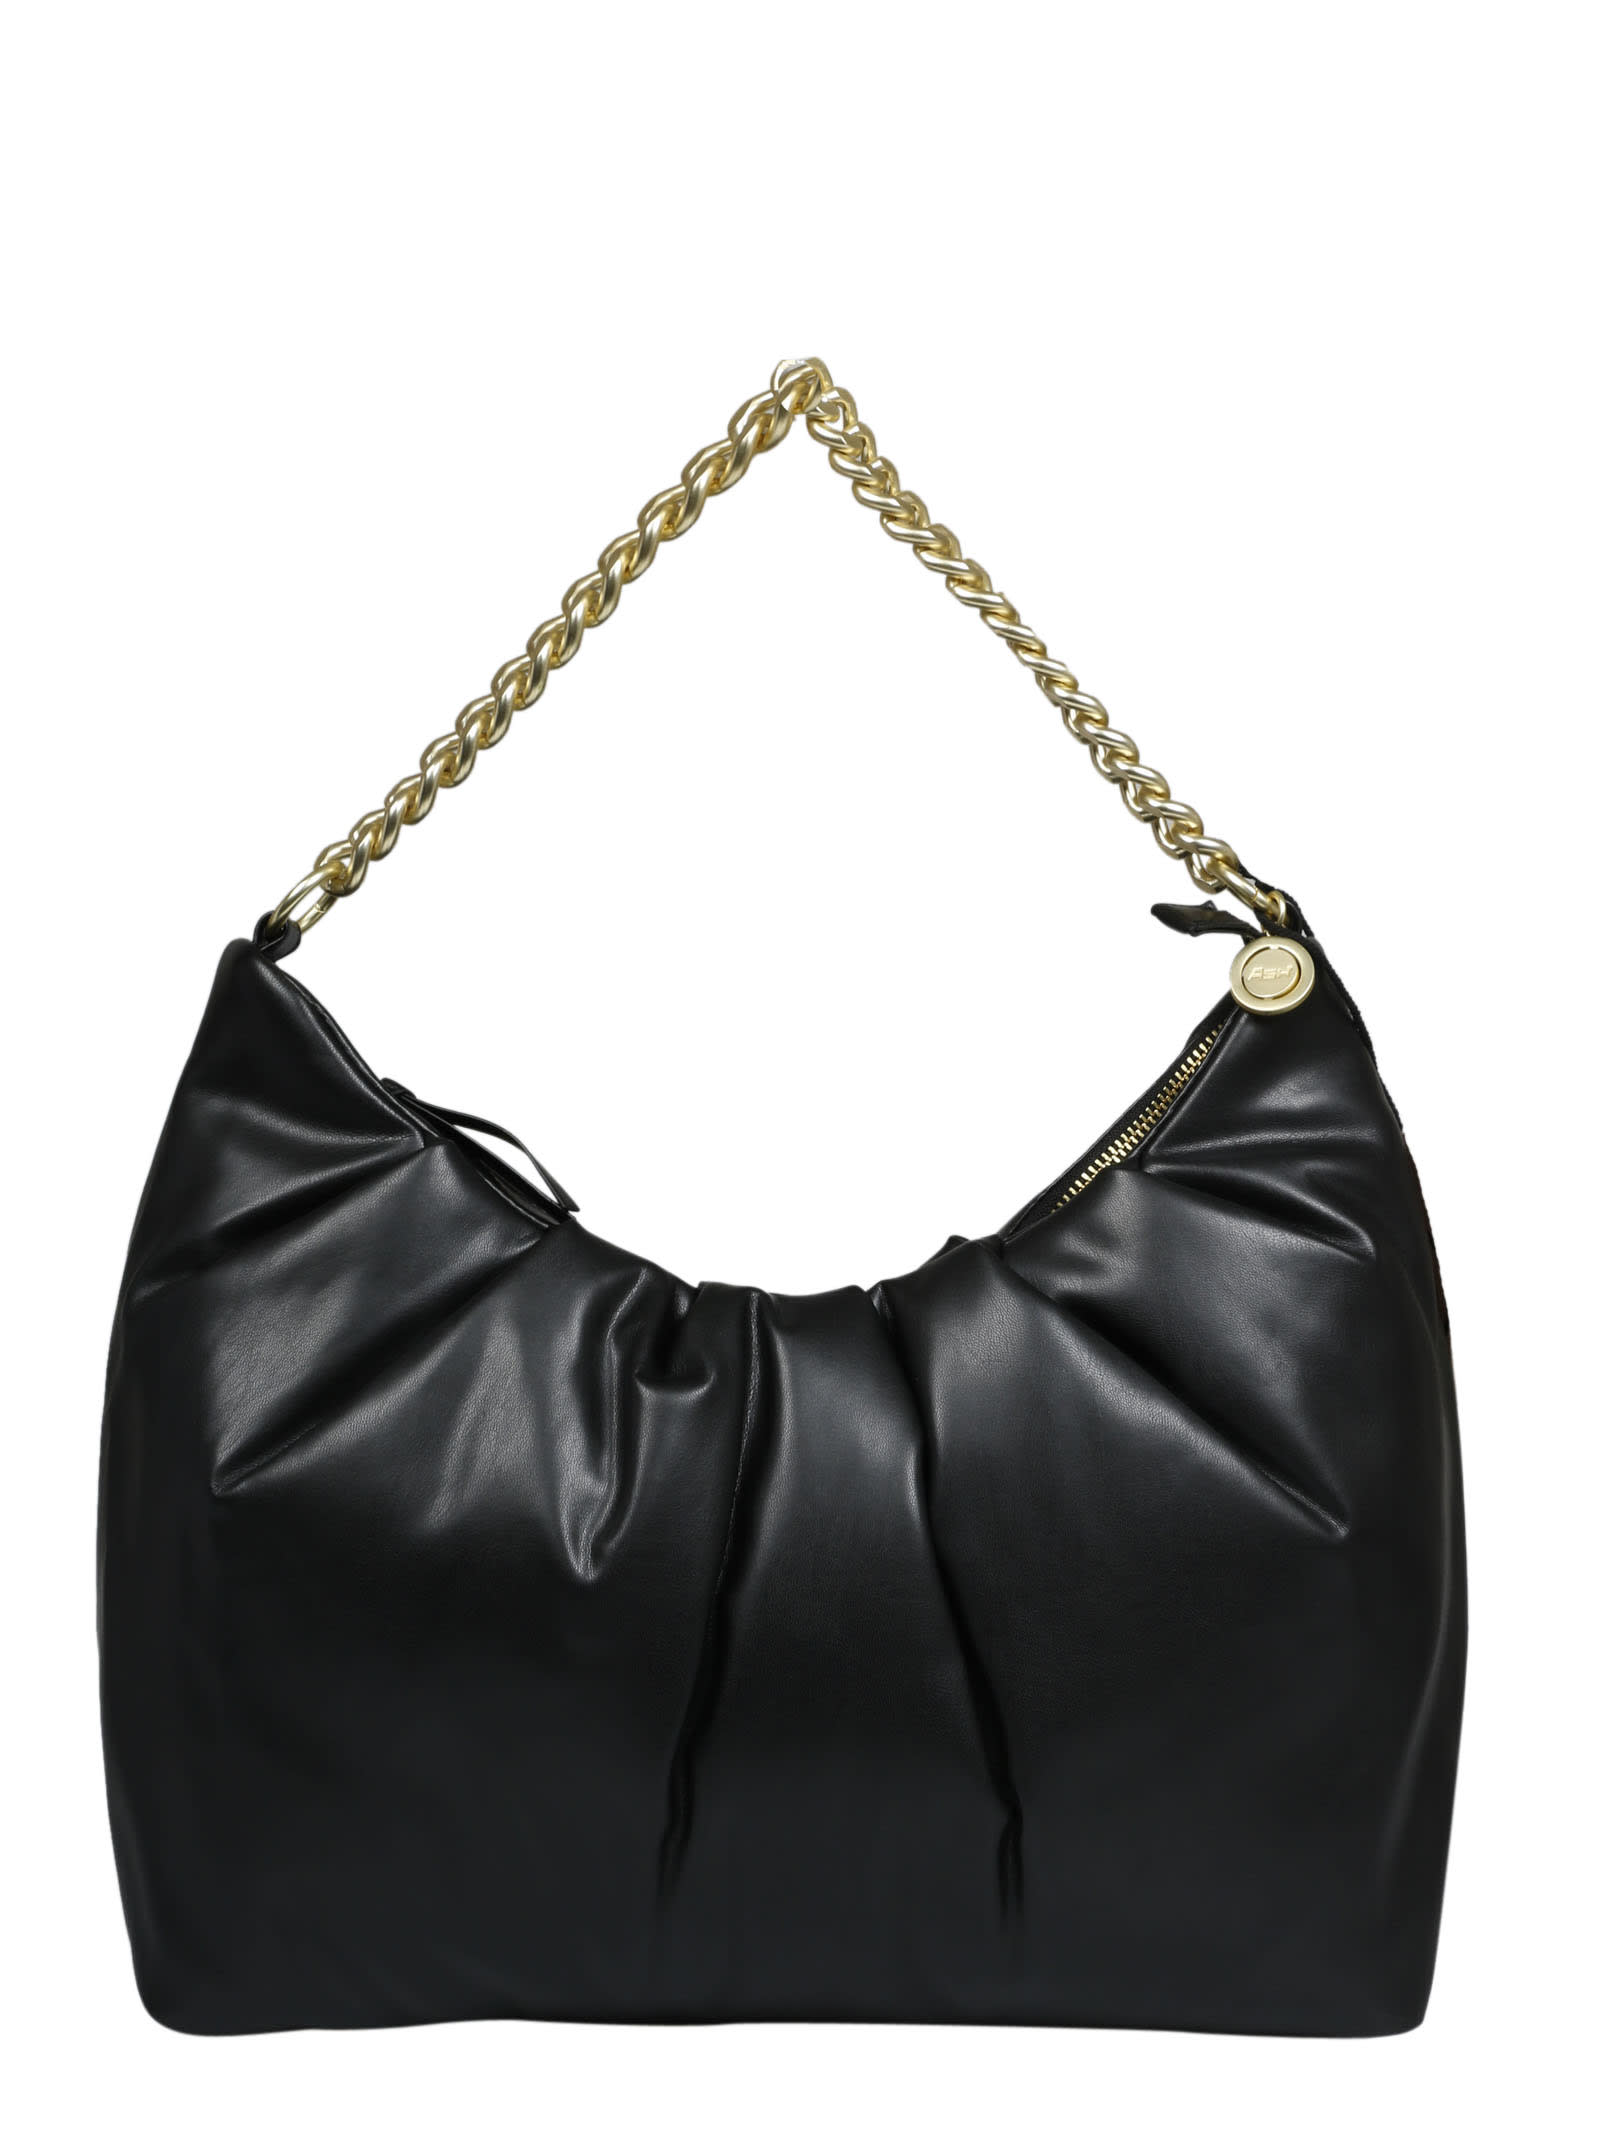 Ash Ottavia Puffy Leather Hobo Bag